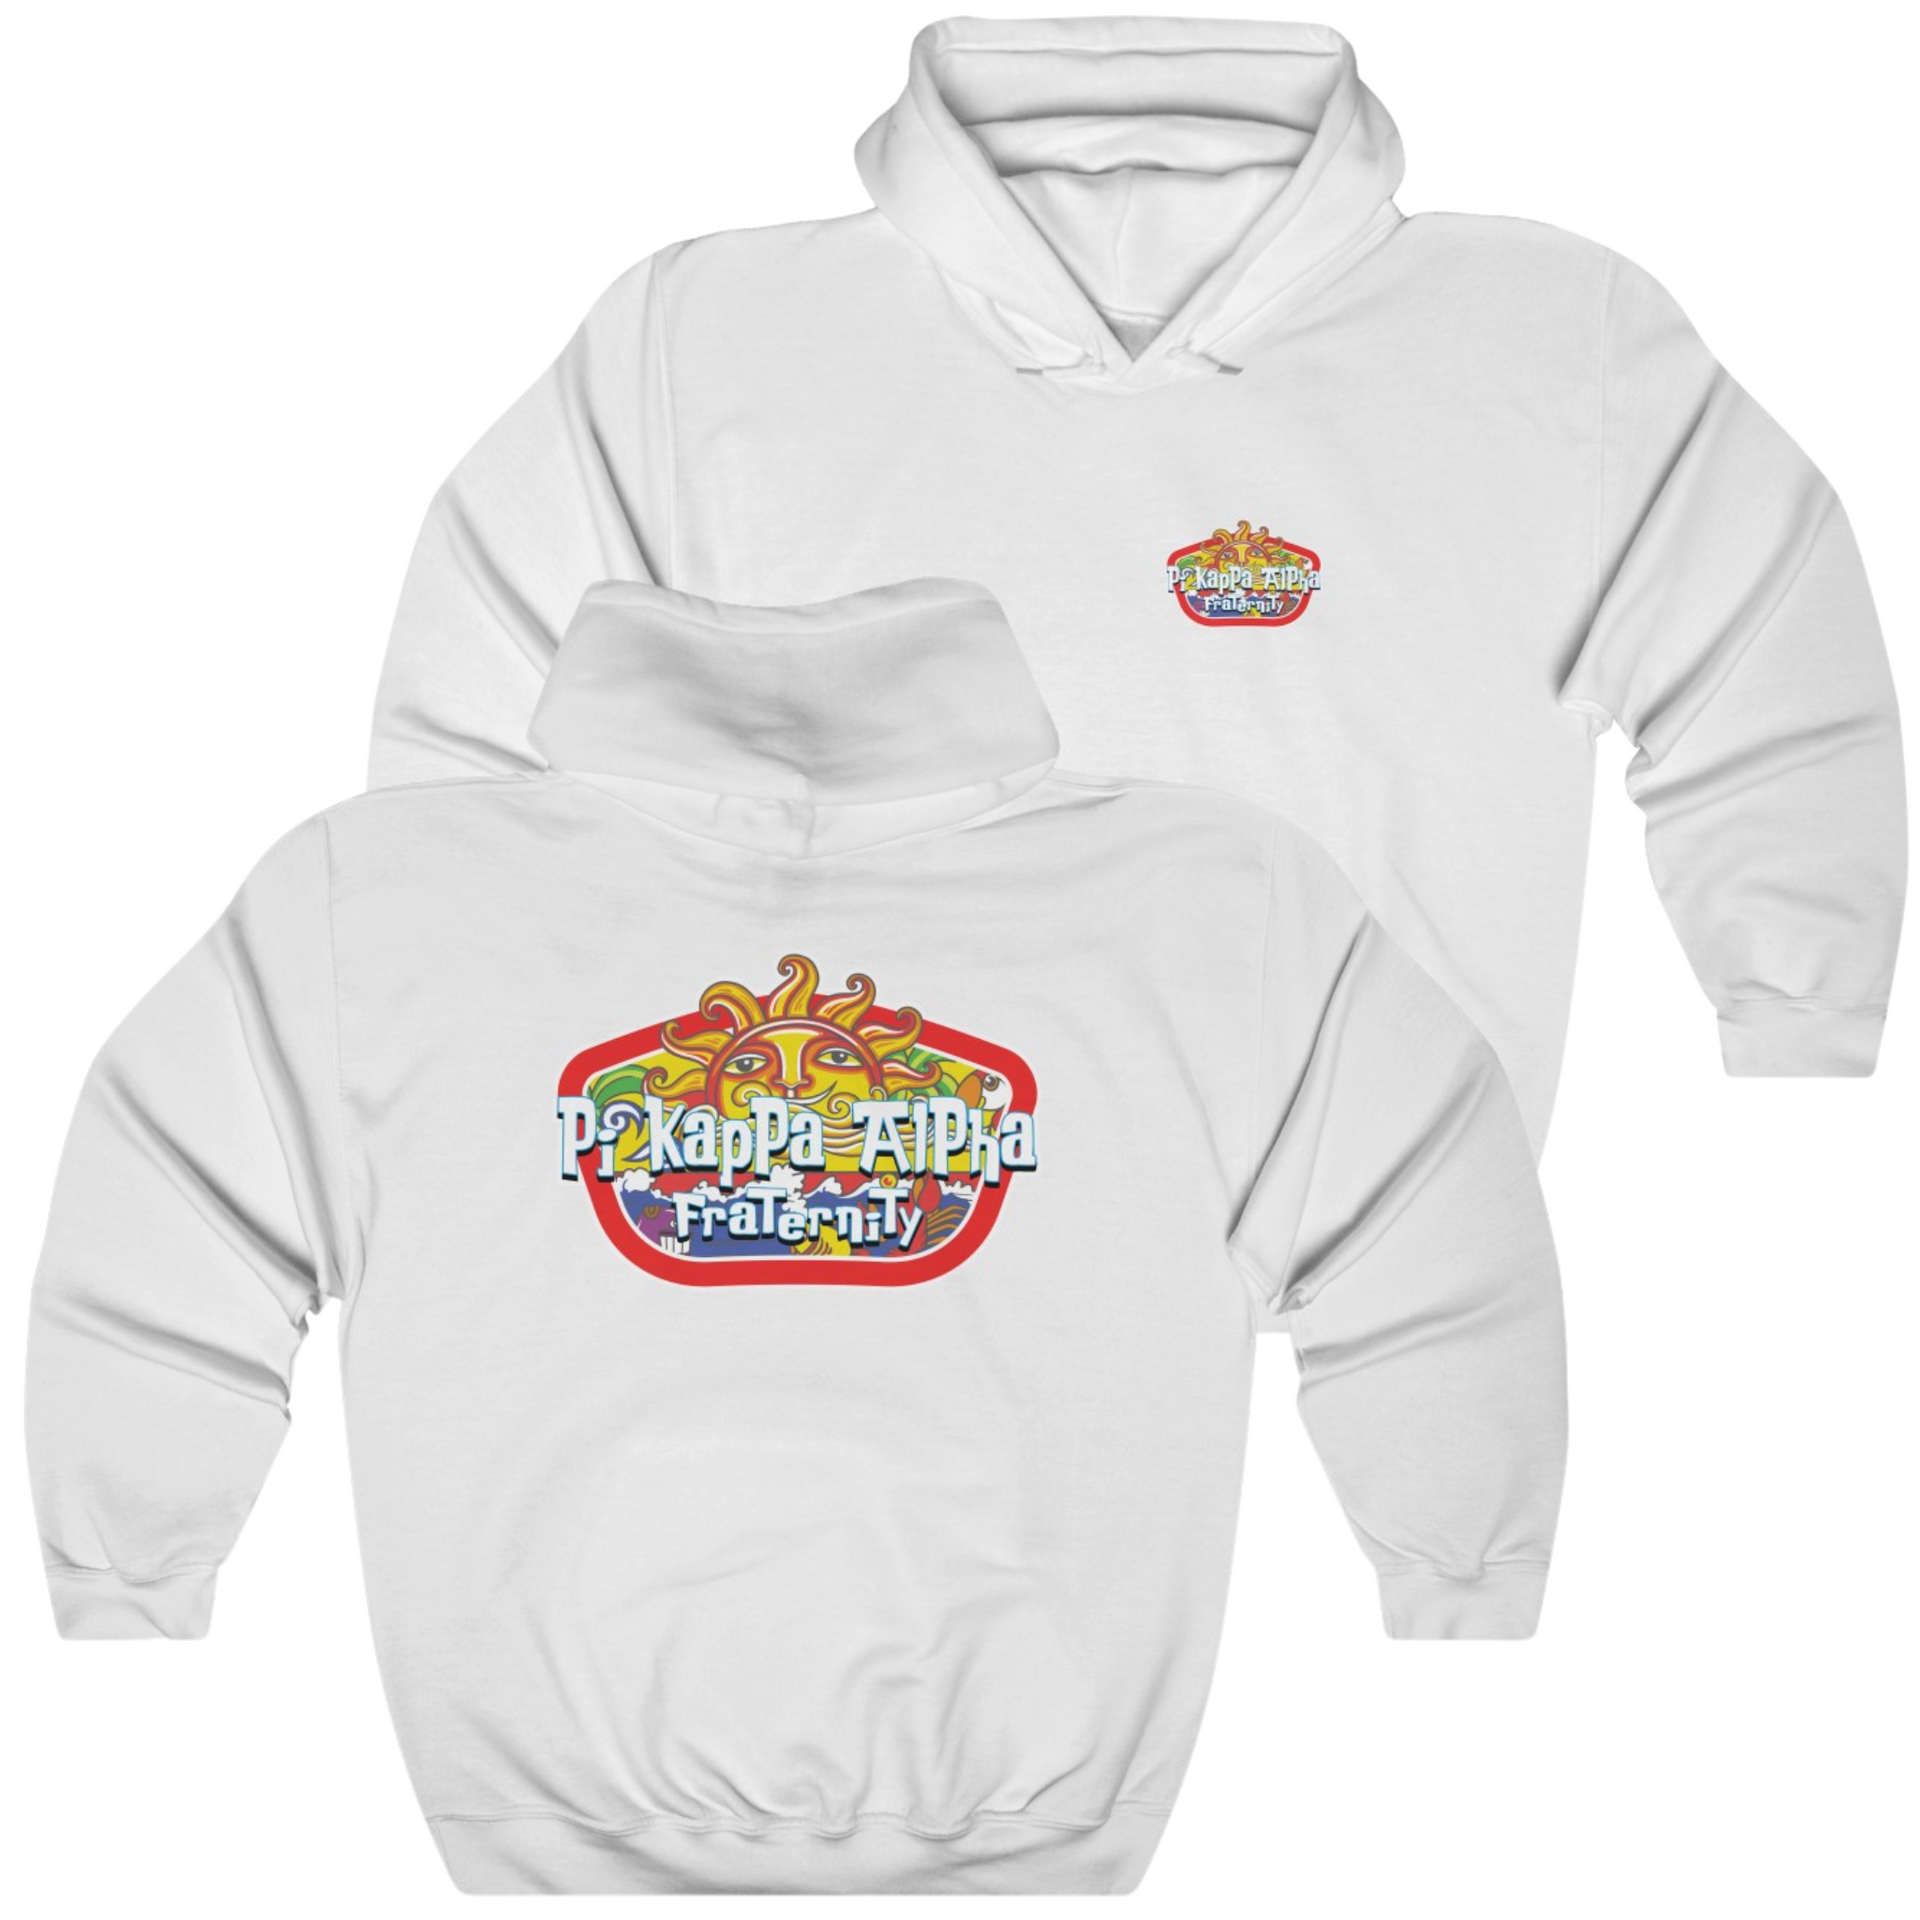 White Pi Kappa Alpha Graphic Hoodie | Summer Sol | Pi kappa alpha fraternity shirt